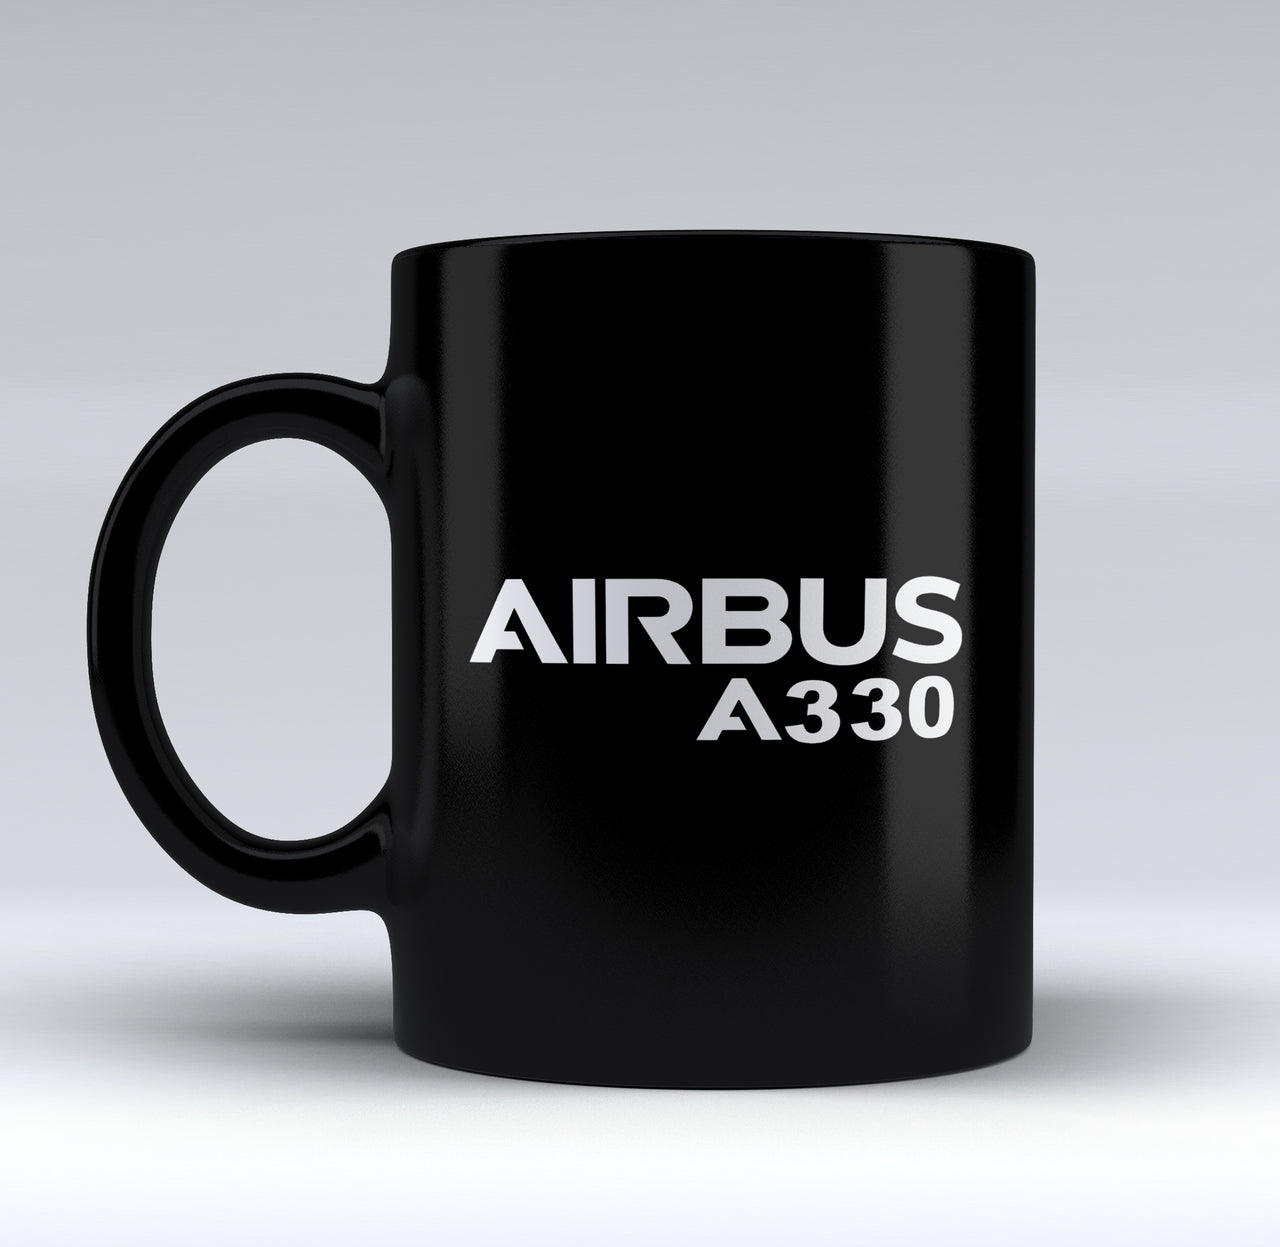 Airbus A330 & Text Designed Black Mugs